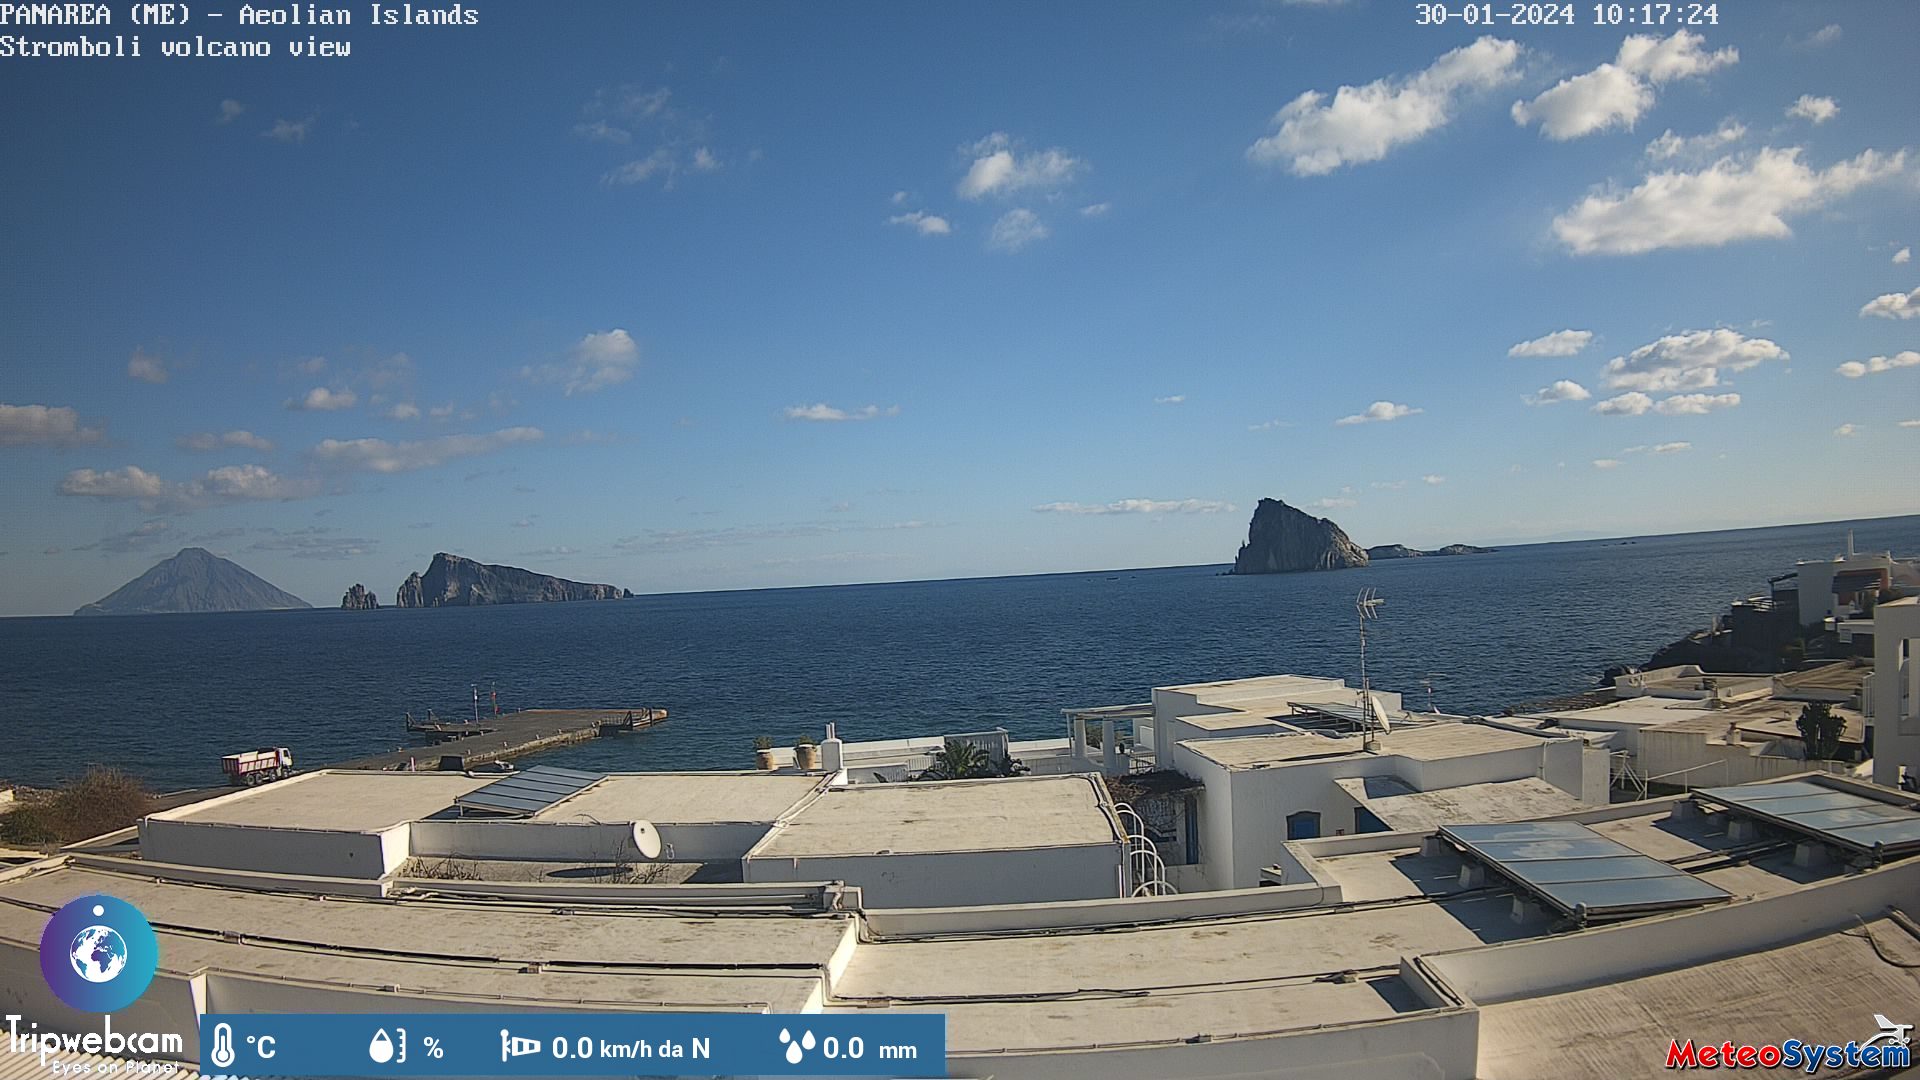 Webcam di Isola di Panarea - Eolie (ME)